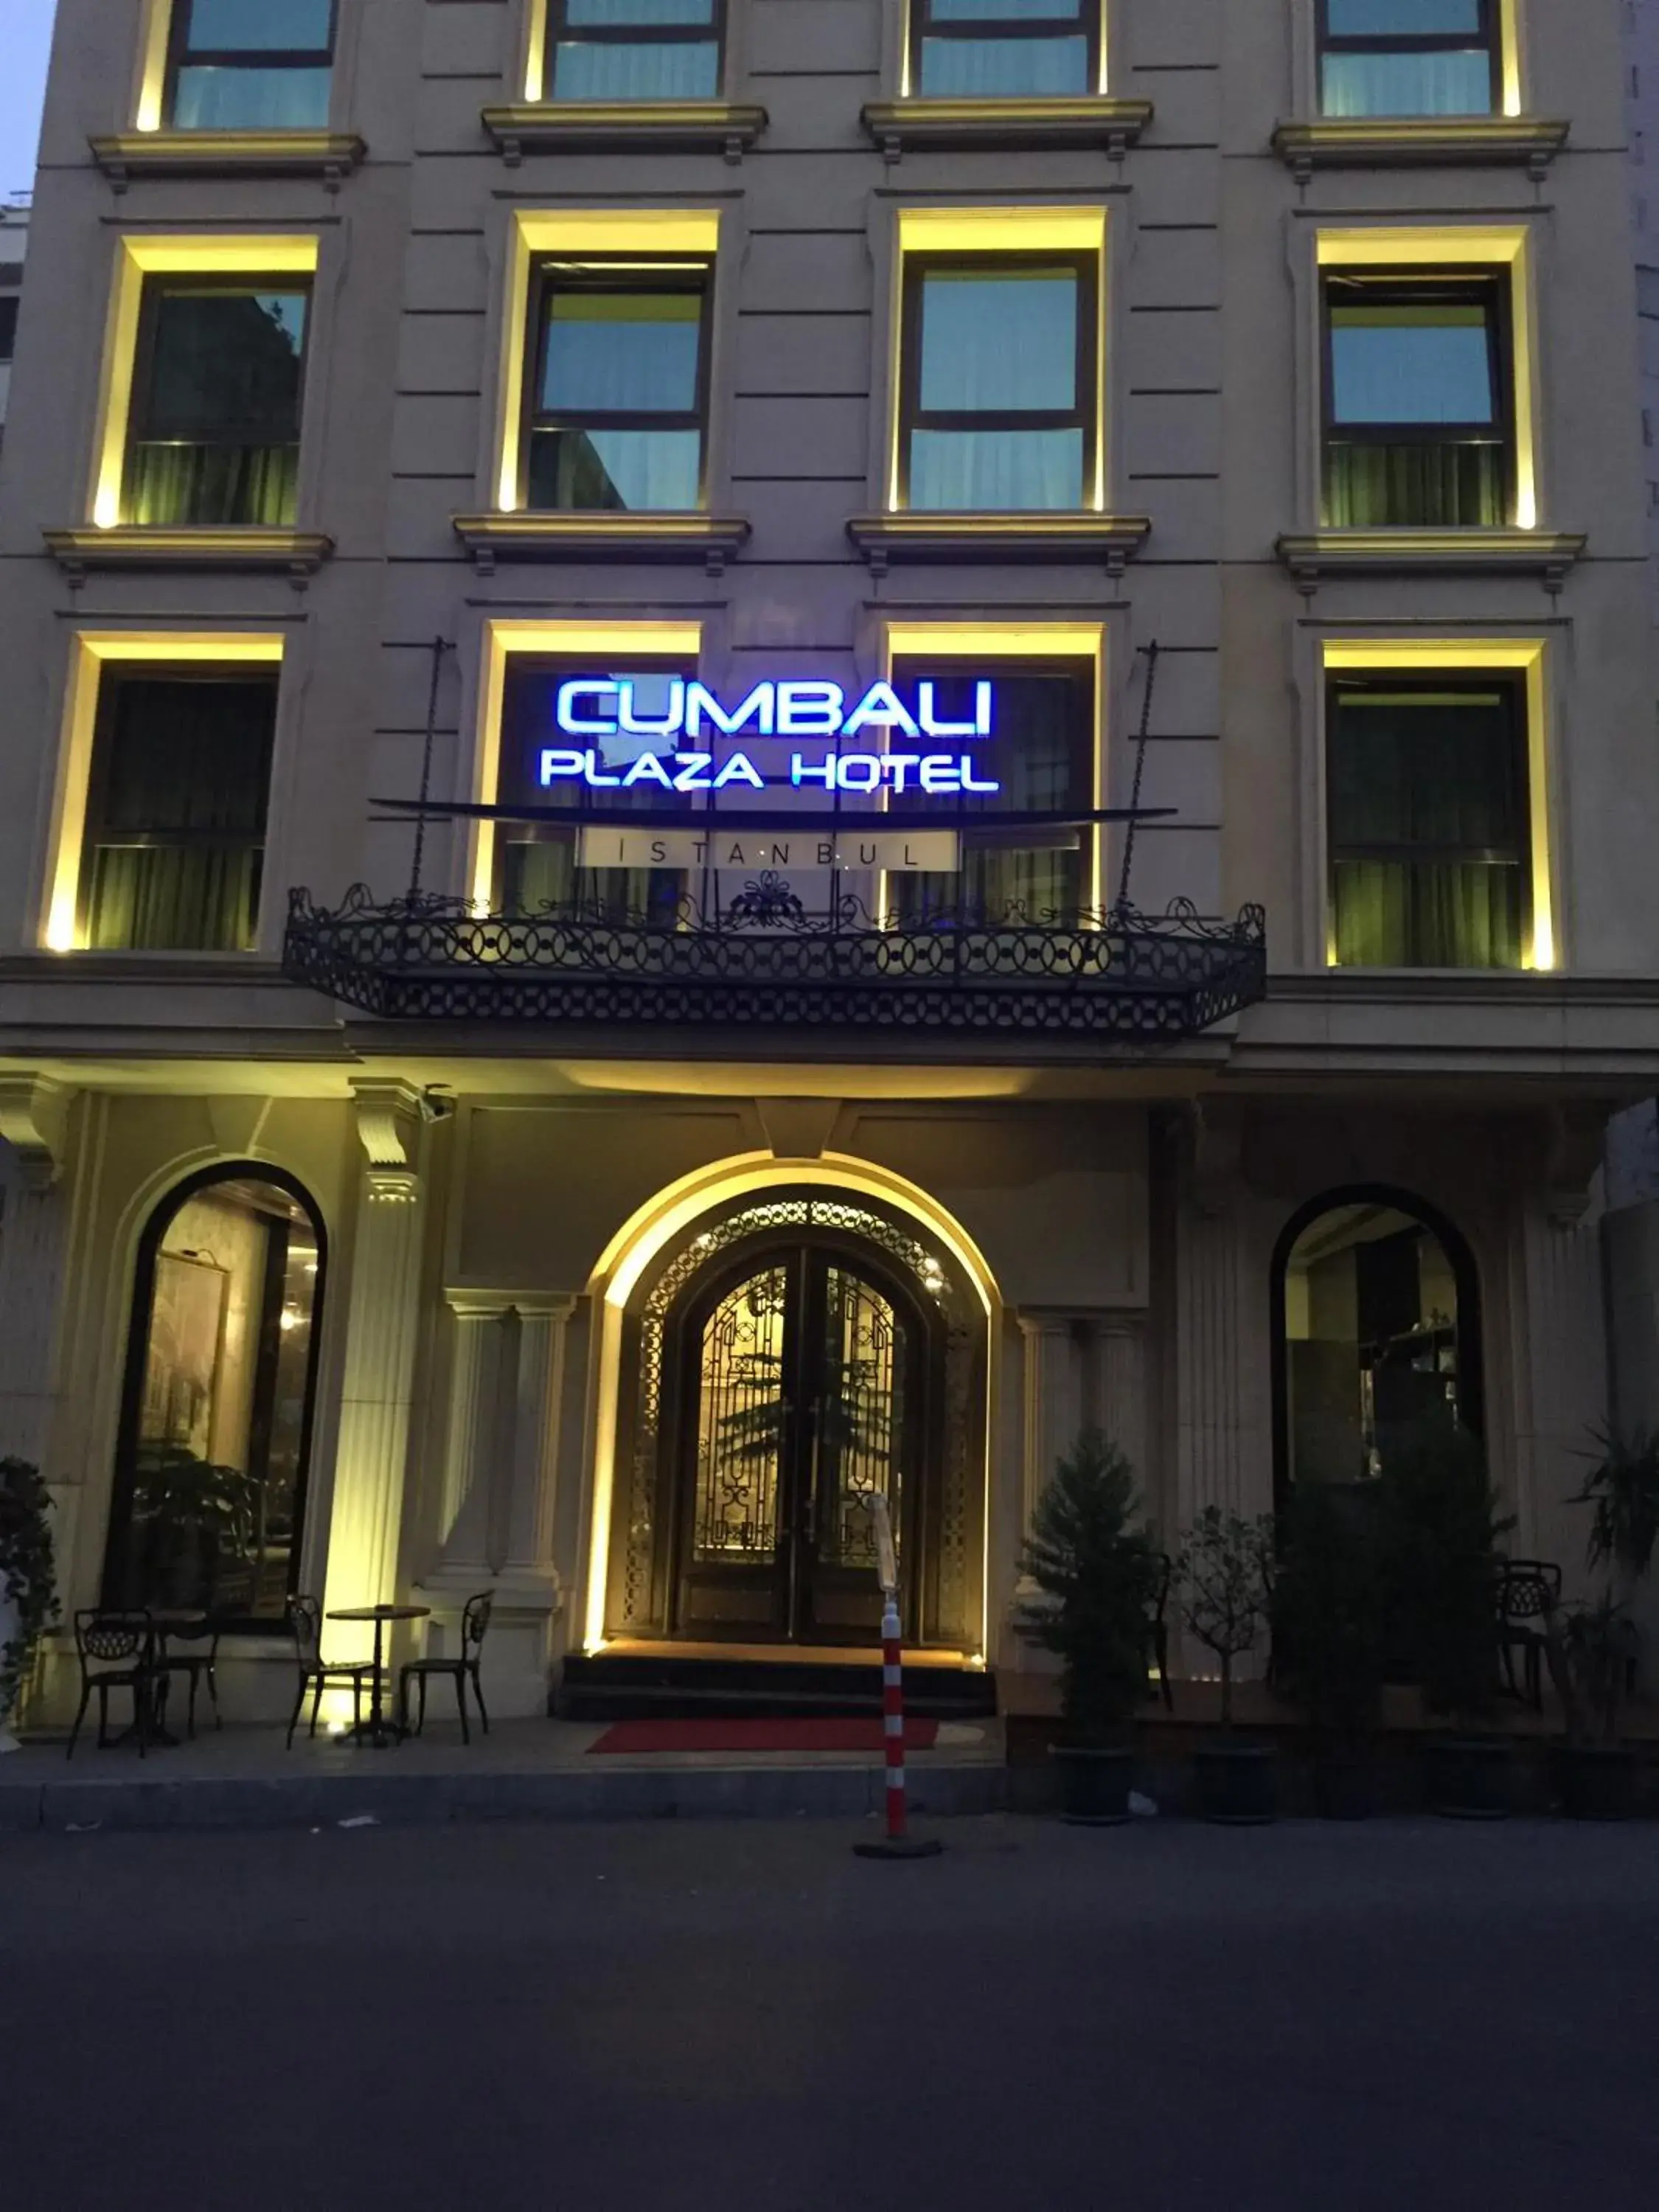 Property building, Facade/Entrance in Cumbali Plaza Hotel